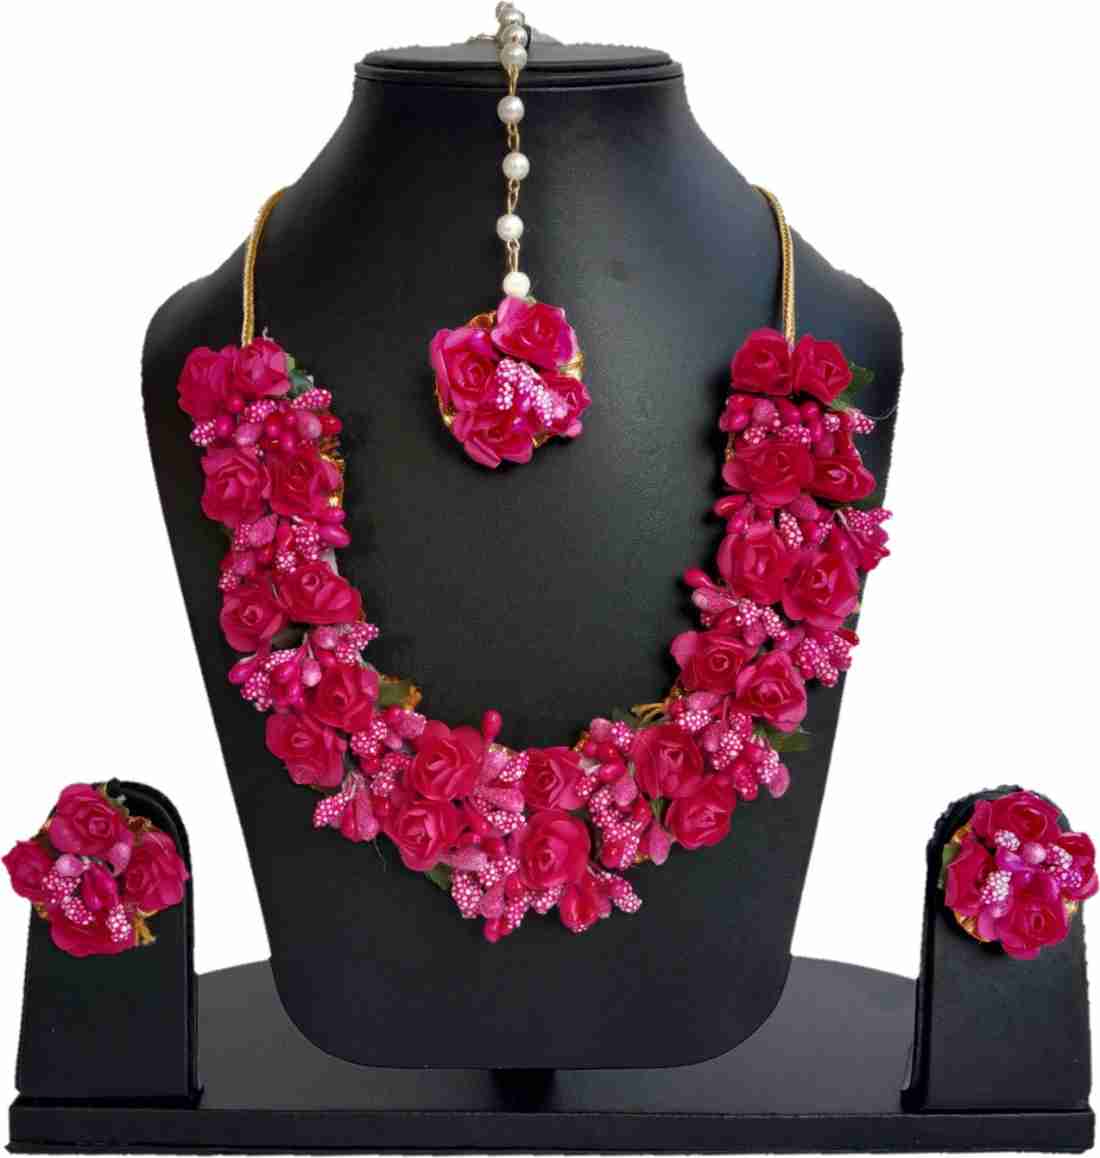 Lamansh Necklace, Earrings & Maangtika set 1 Necklace, 2 Earrings,1 Maangtika set / Pink LAMANSH® Designer Floral Jewellery Set for Women & Girls / Haldi Set